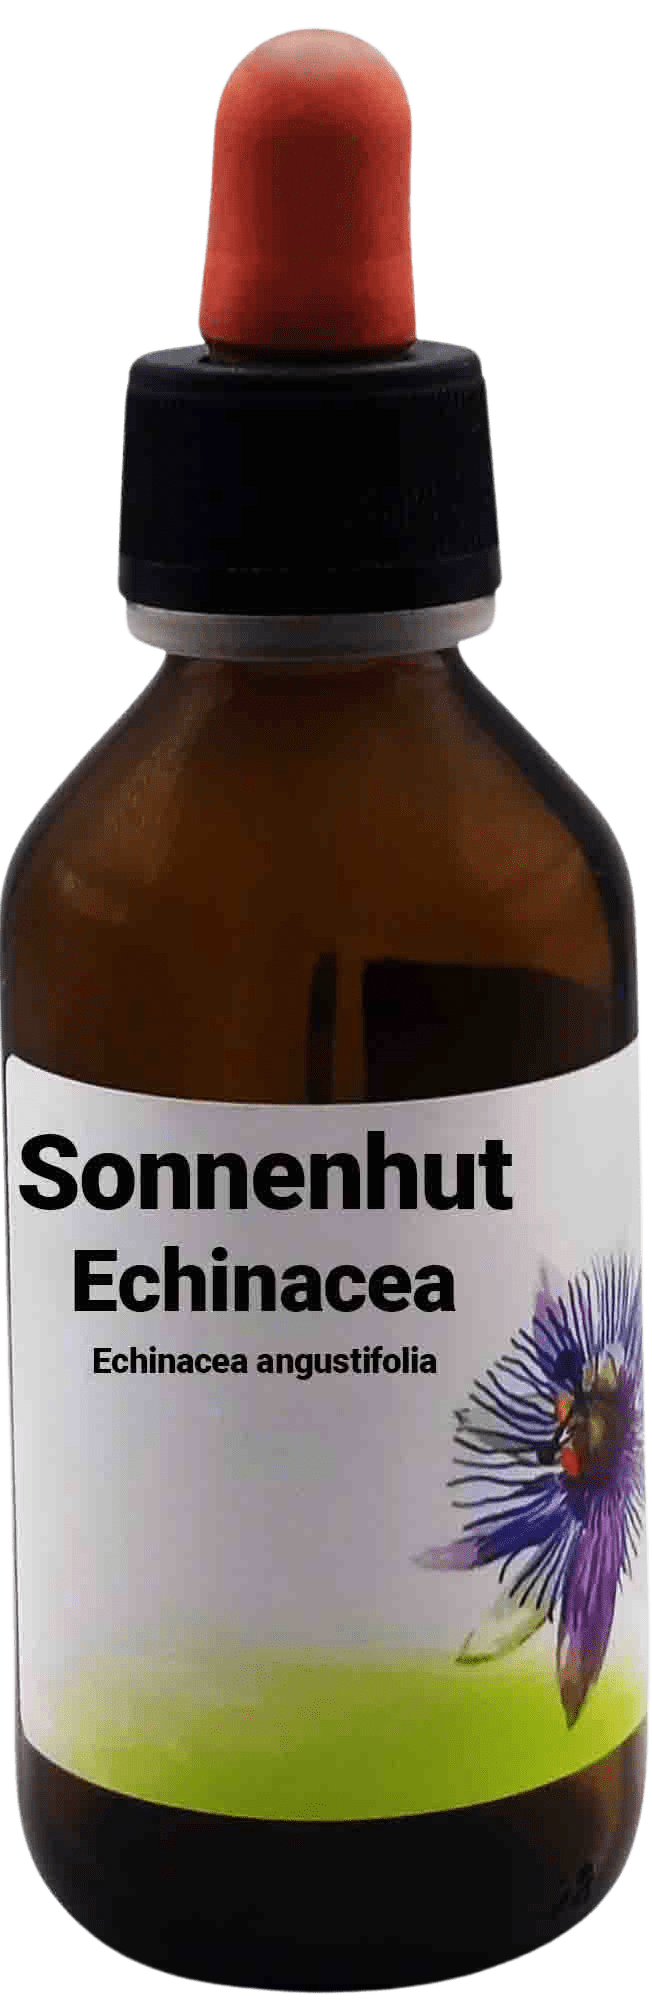 Sonnenhut_Echinacea_Echinacea_angustifolia_100_ml